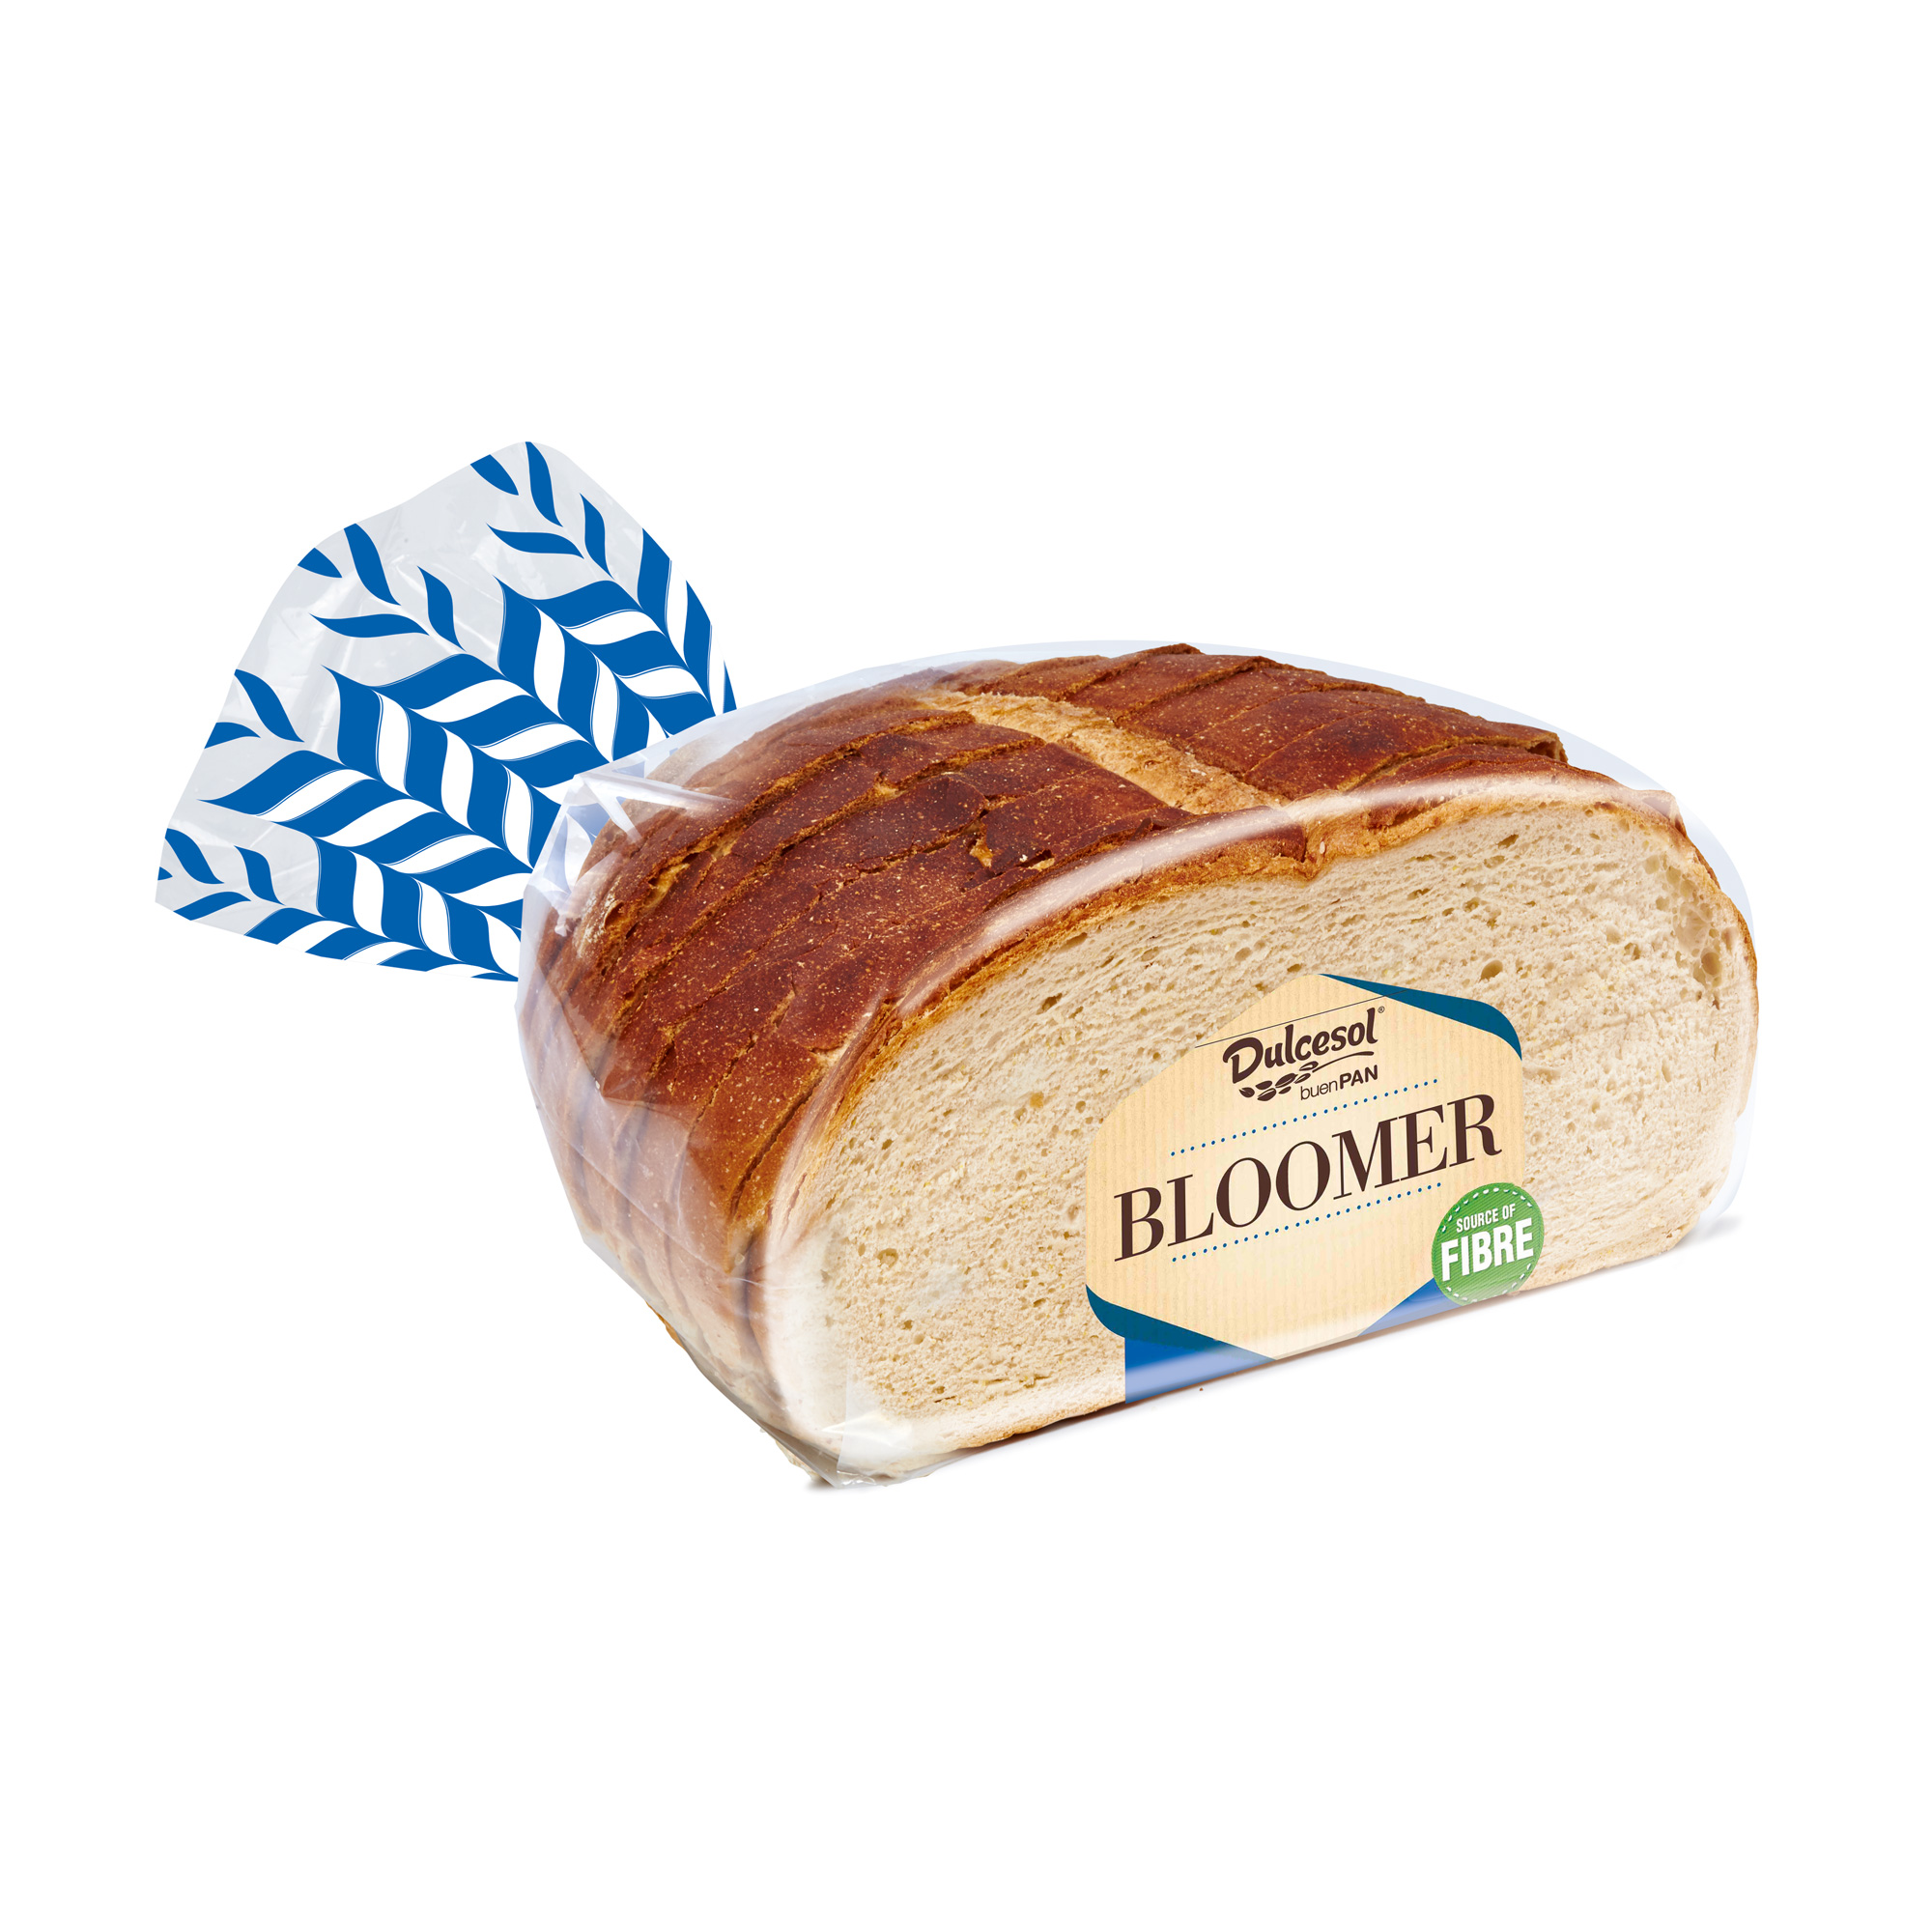 Dulcesol Bloomer bread